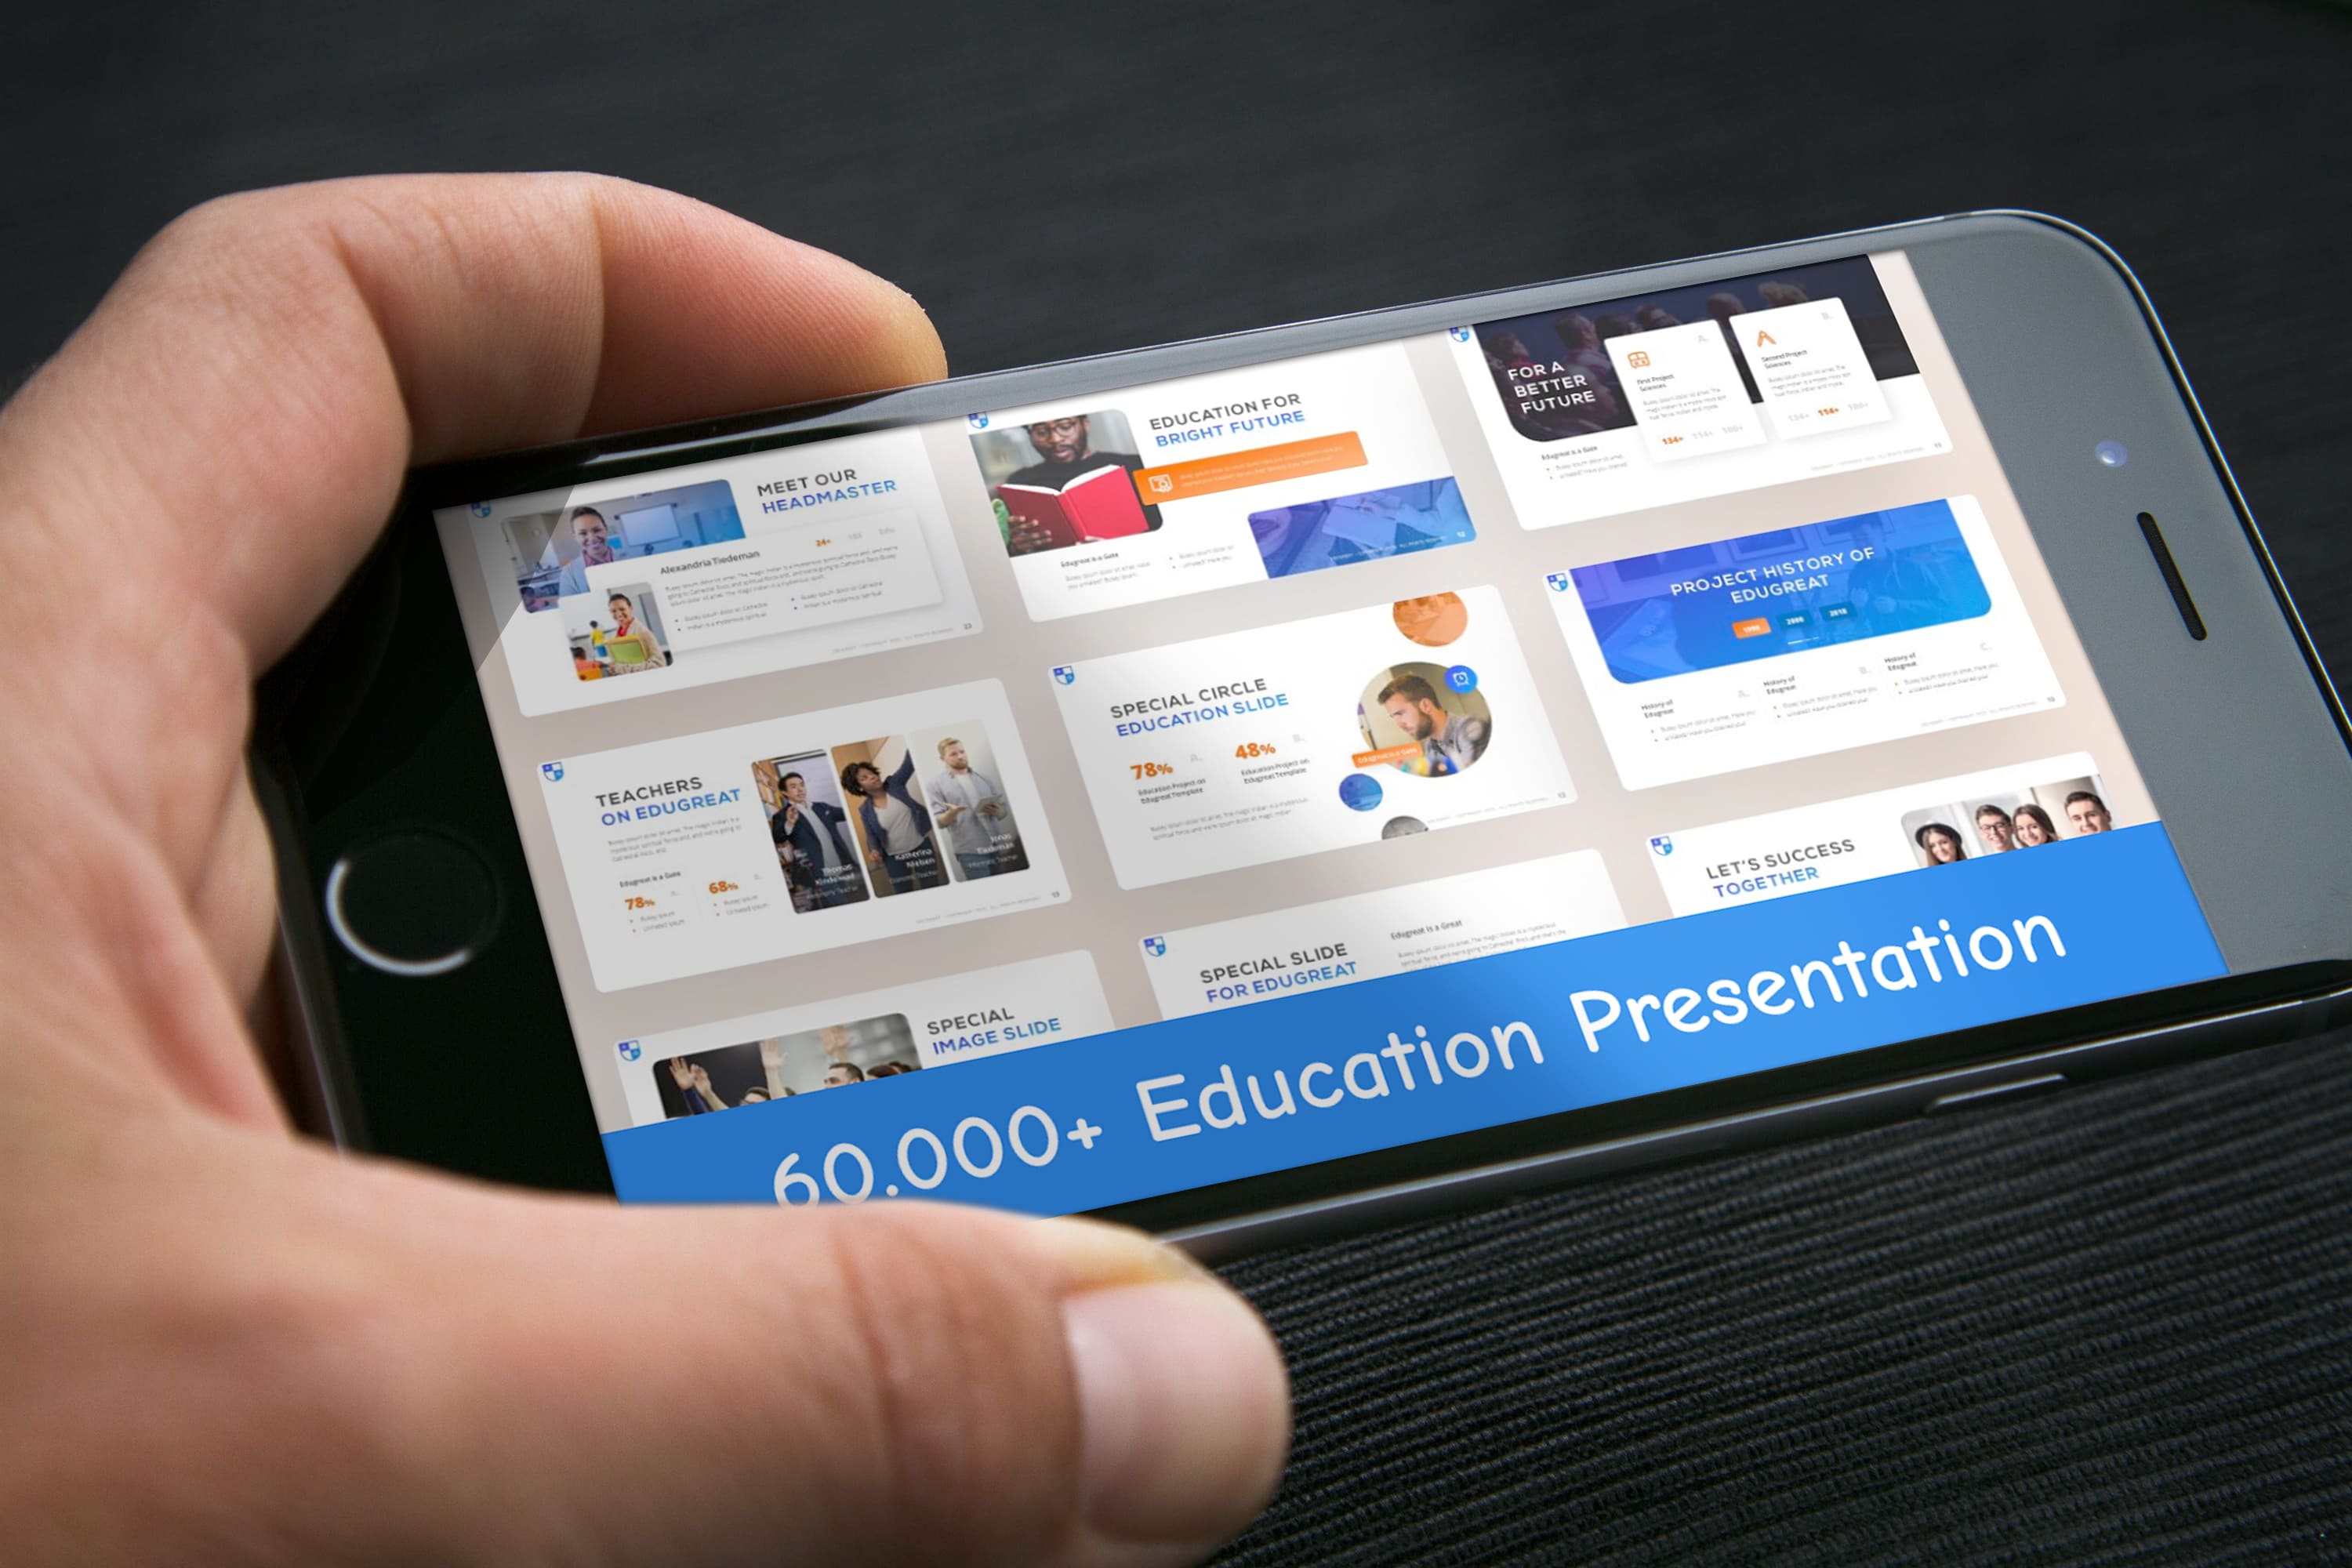 60.000+ Education Presentation Template - Mockup on Smartphone.